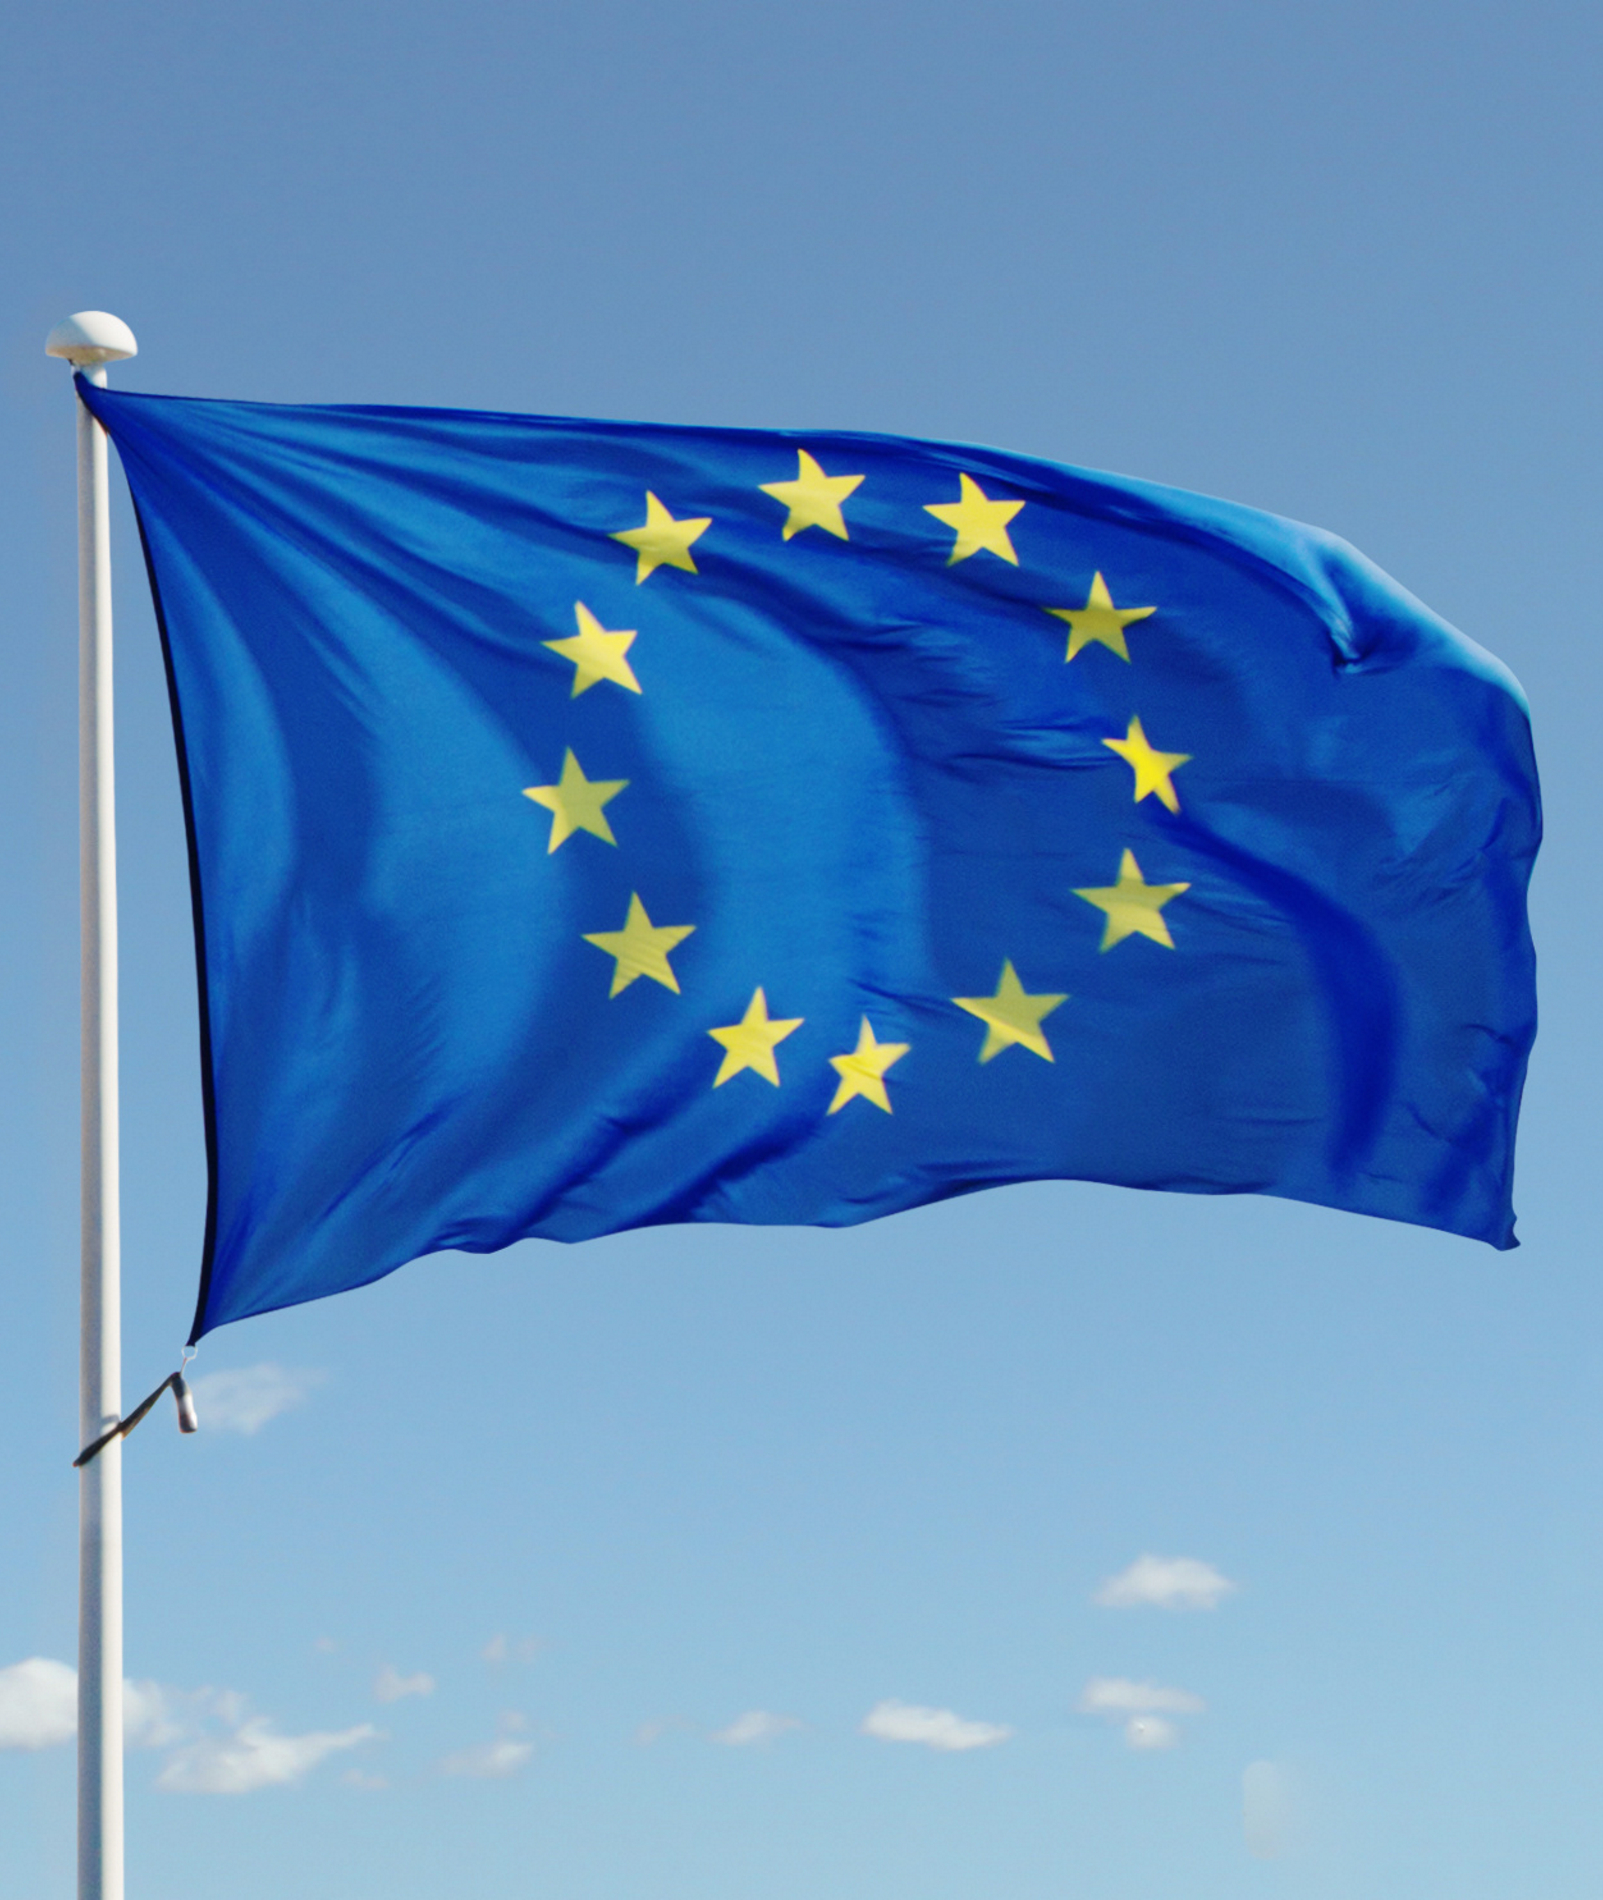 EU flag waving against blue sky with clouds.